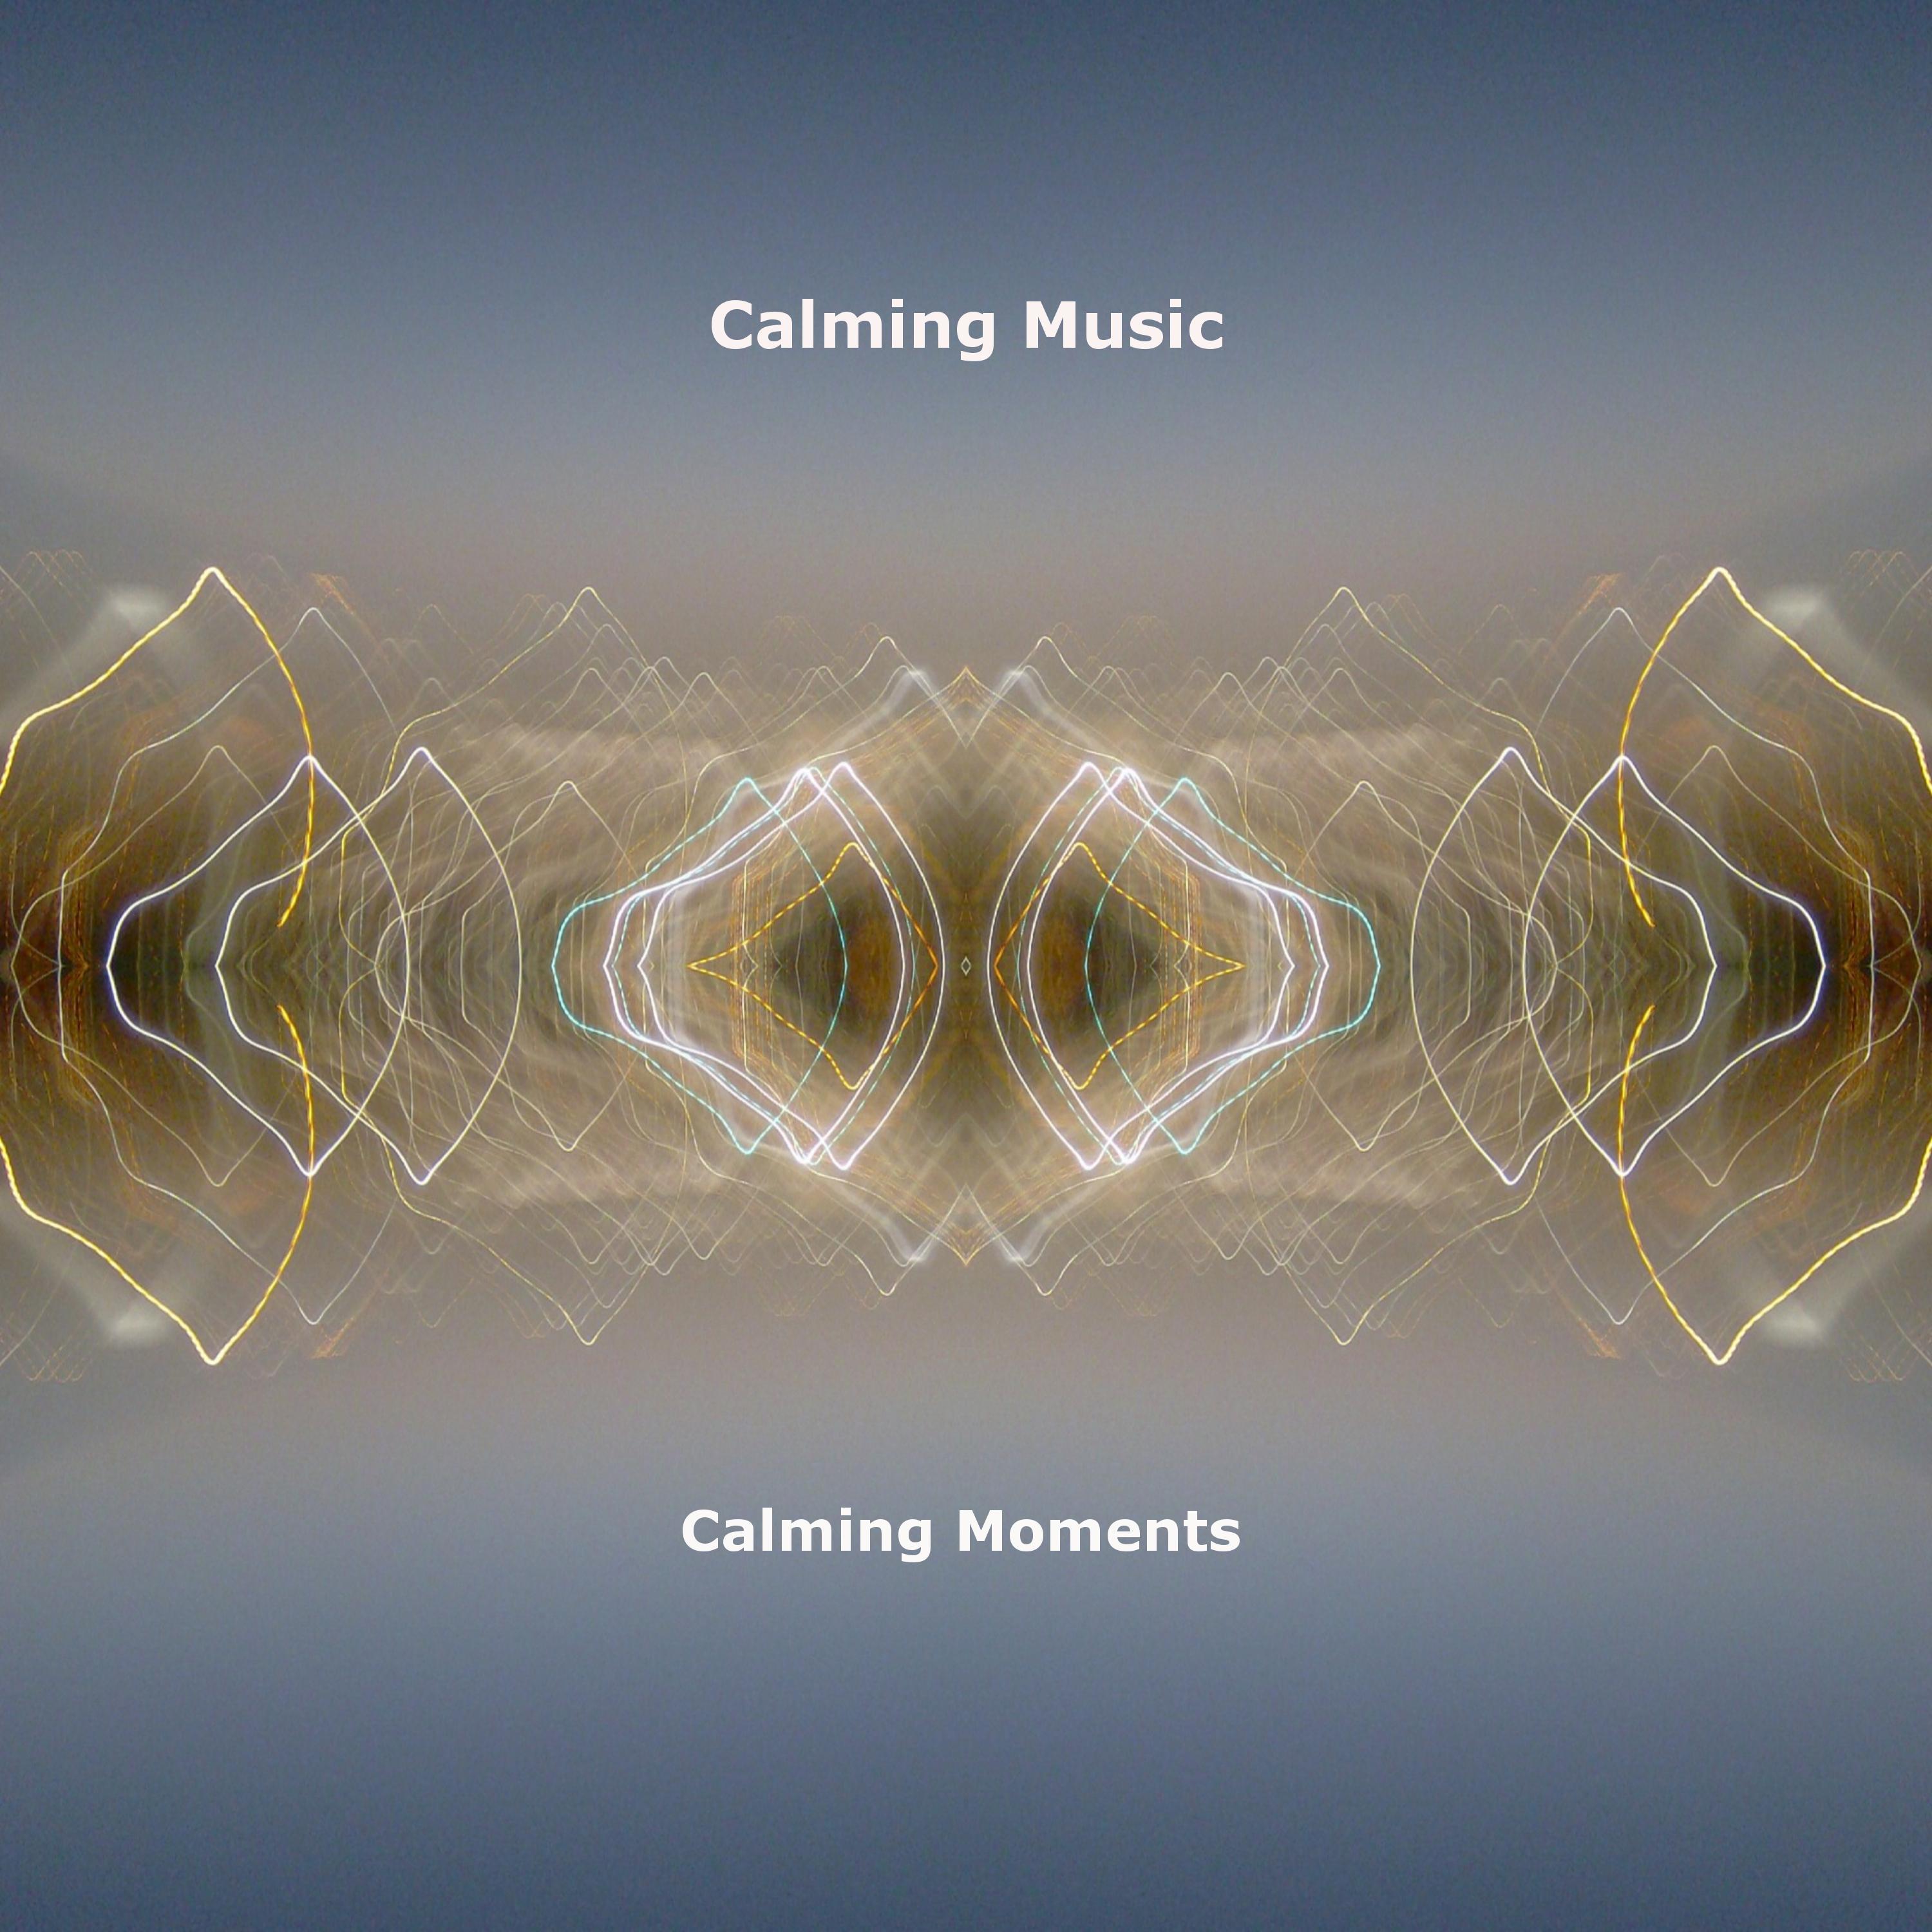 Calming Moments